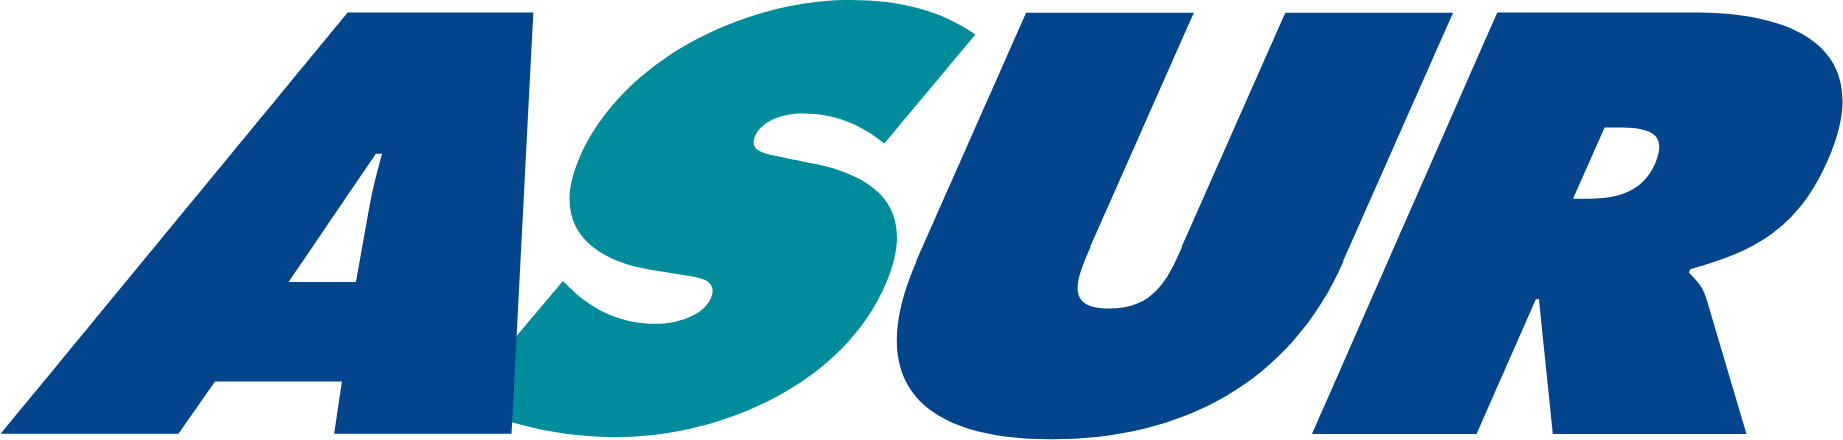 Grupo Aeroportuario del Sureste
 logo (PNG transparent)